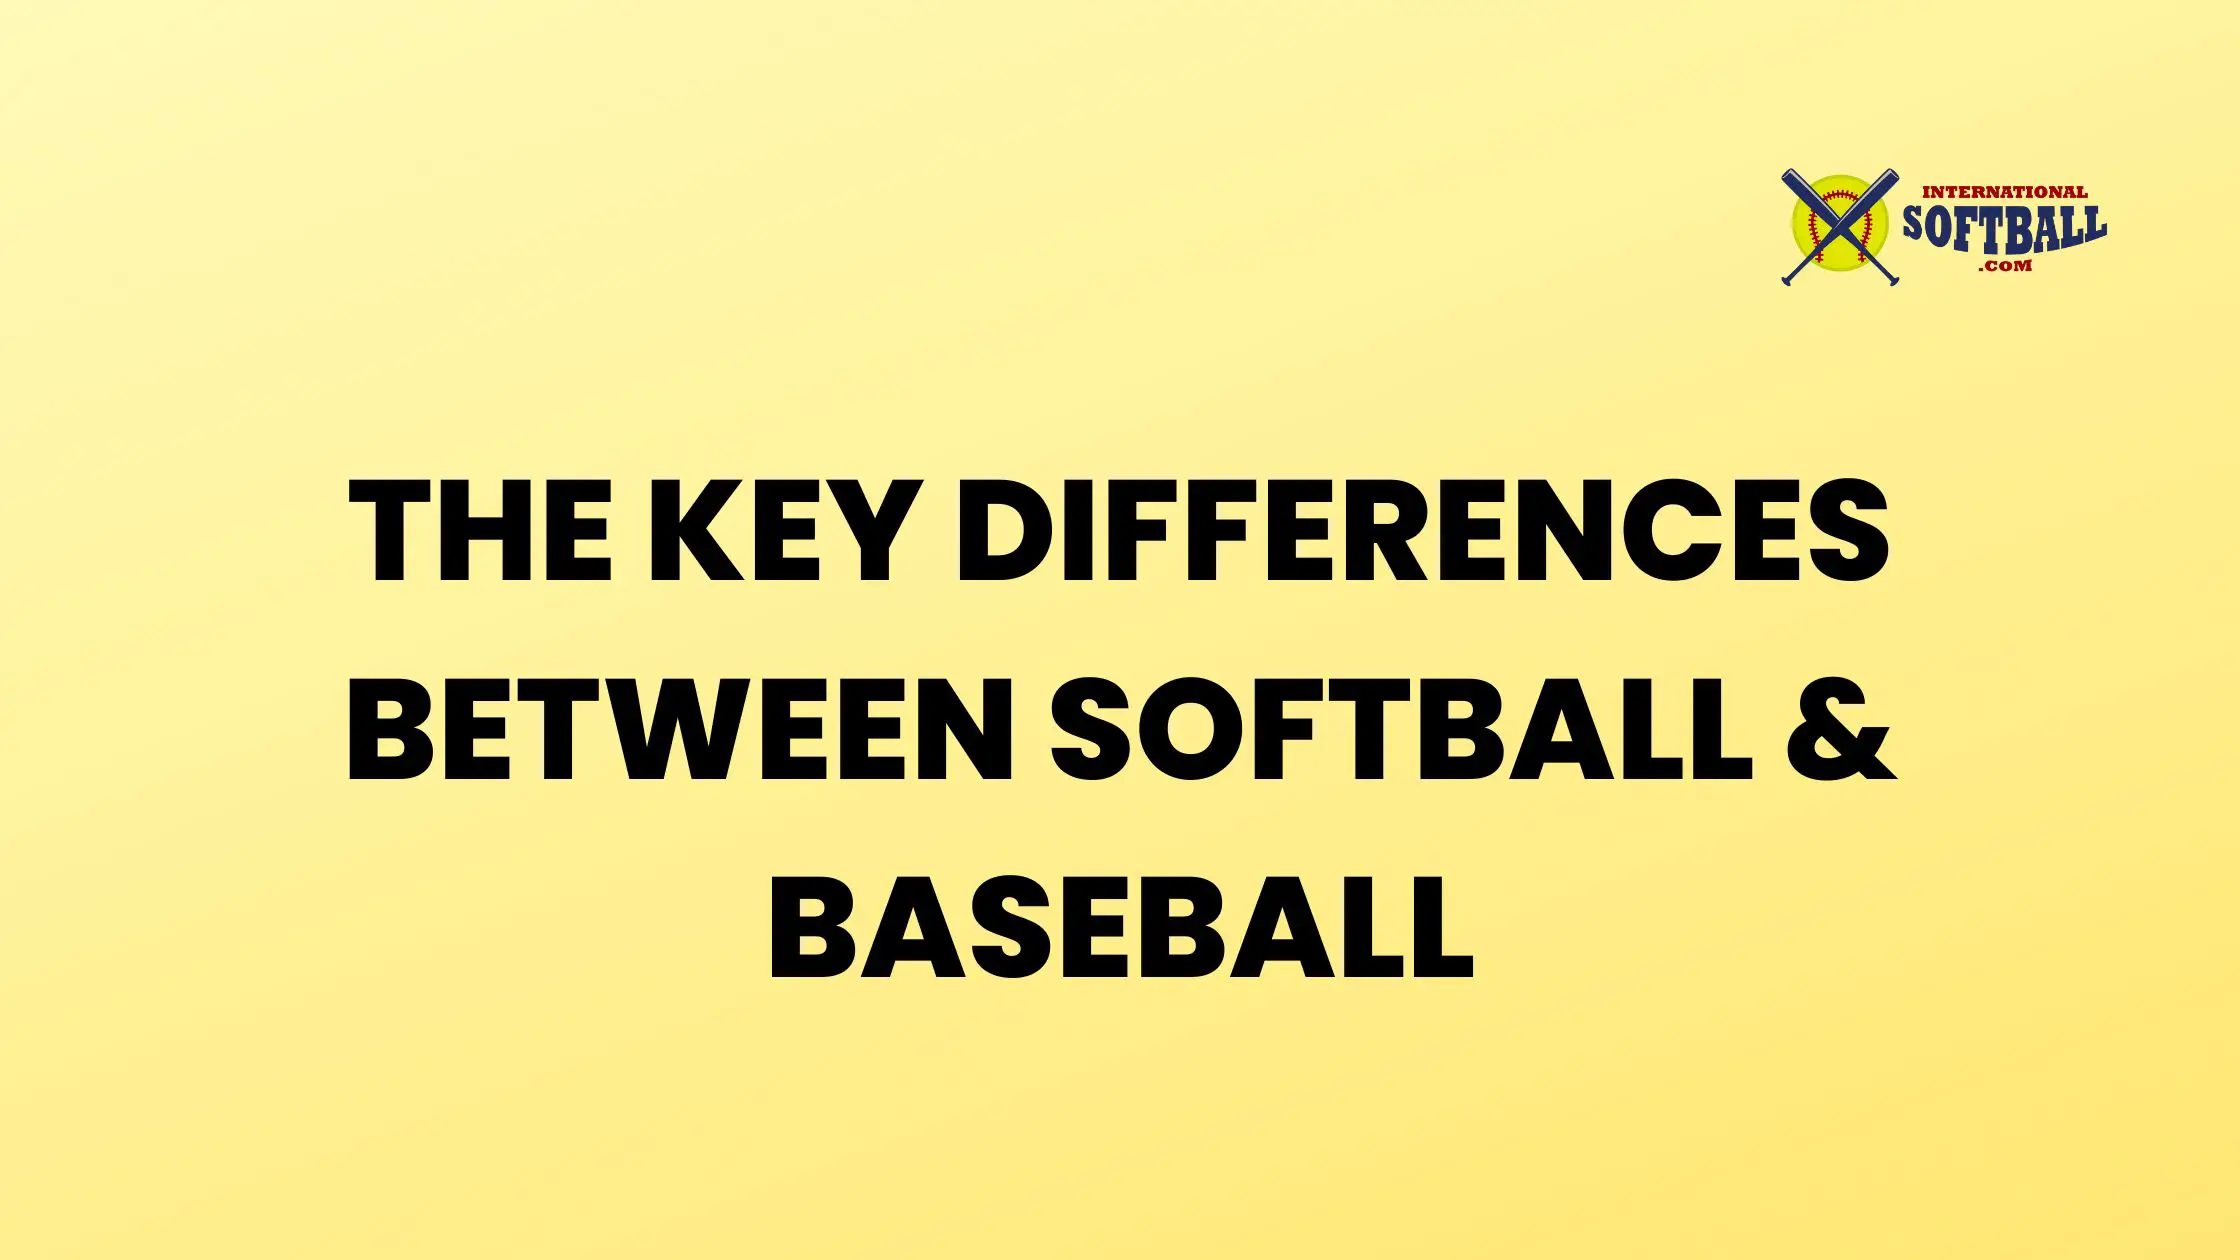 THE KEY DIFFERENCES BETWEEN SOFTBALL & BASEBALL